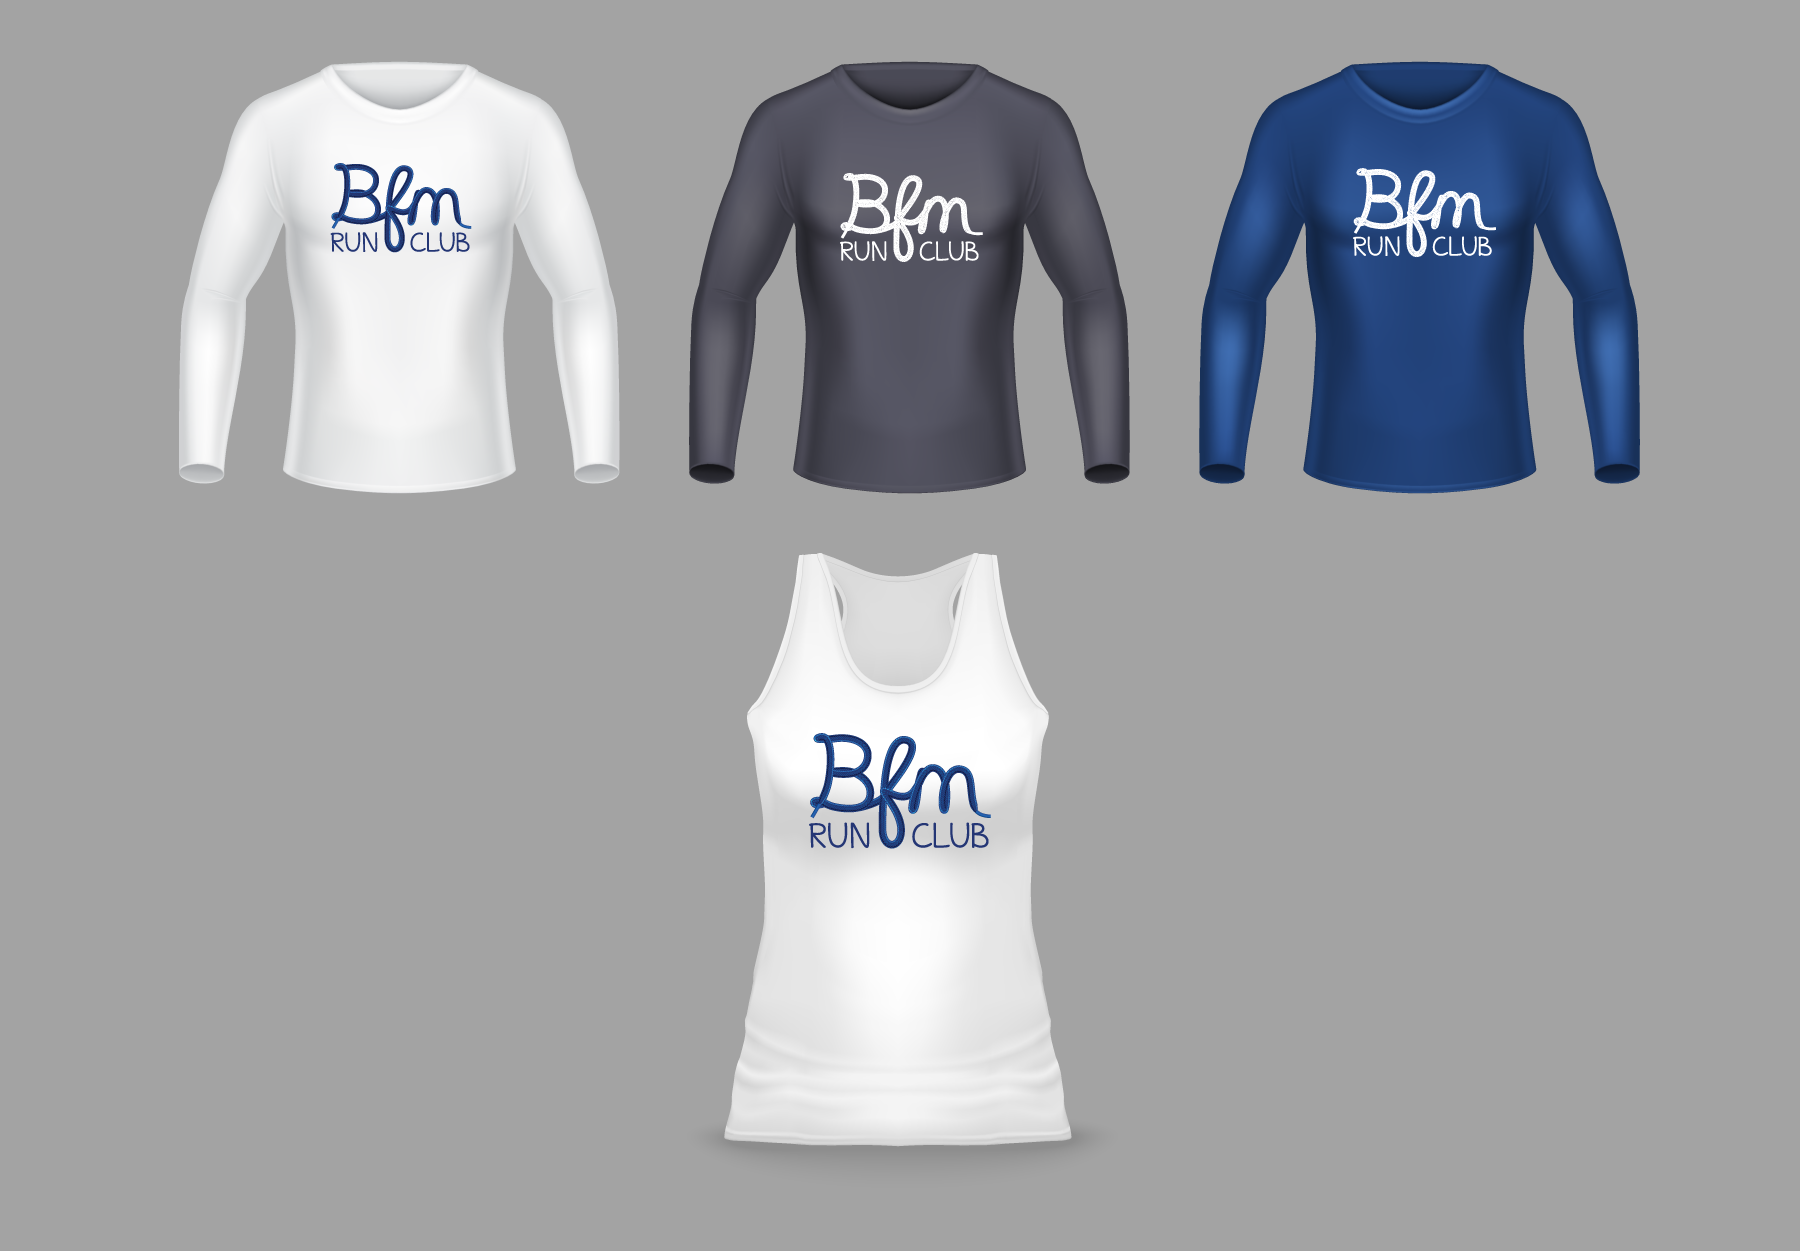 BFM-shirtoptions.png